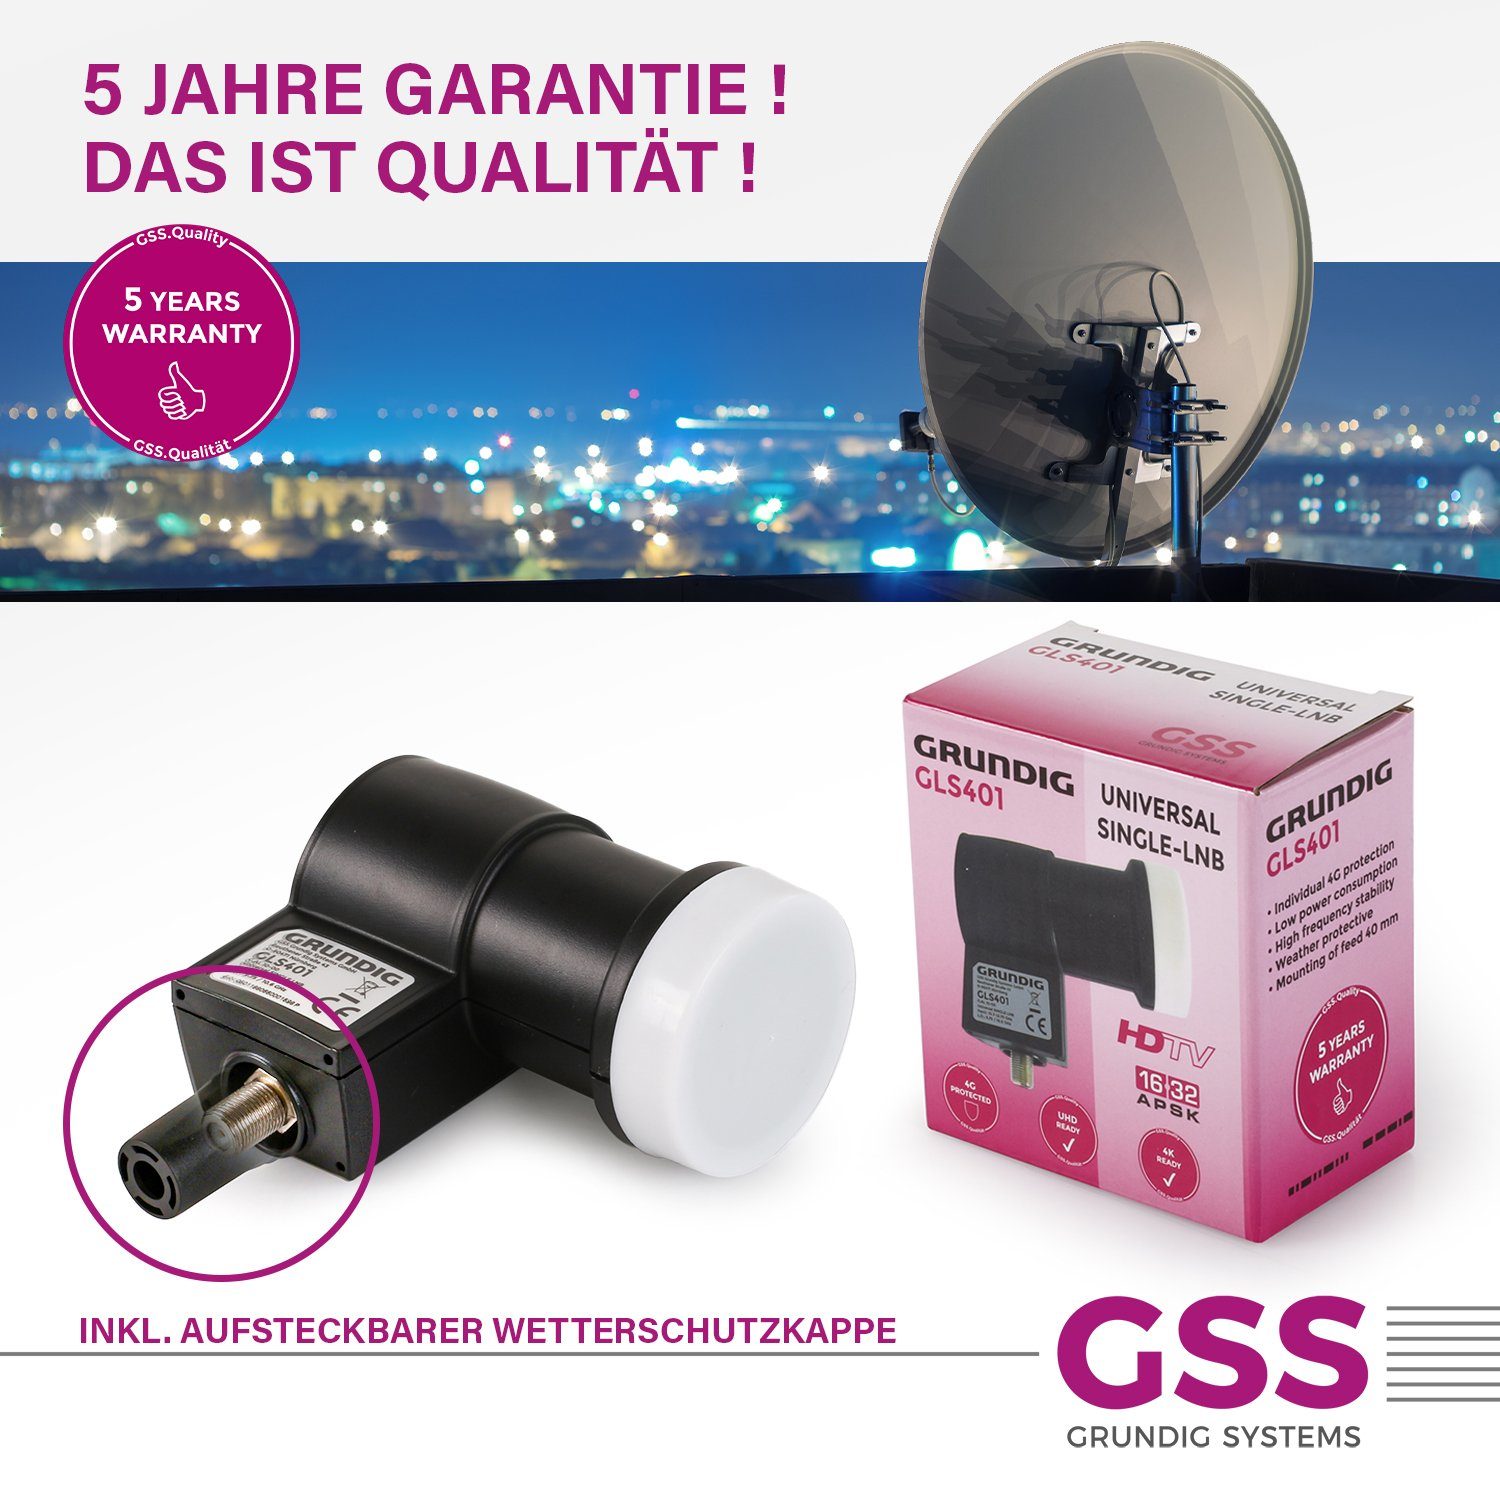 + Aufdrehhilfe (LTE Wetterschutzkappe, GLS & schwarz - 401 Universal-Single-LNB Full hitzebeständig) GSS kälte- Filter 4K, HD,